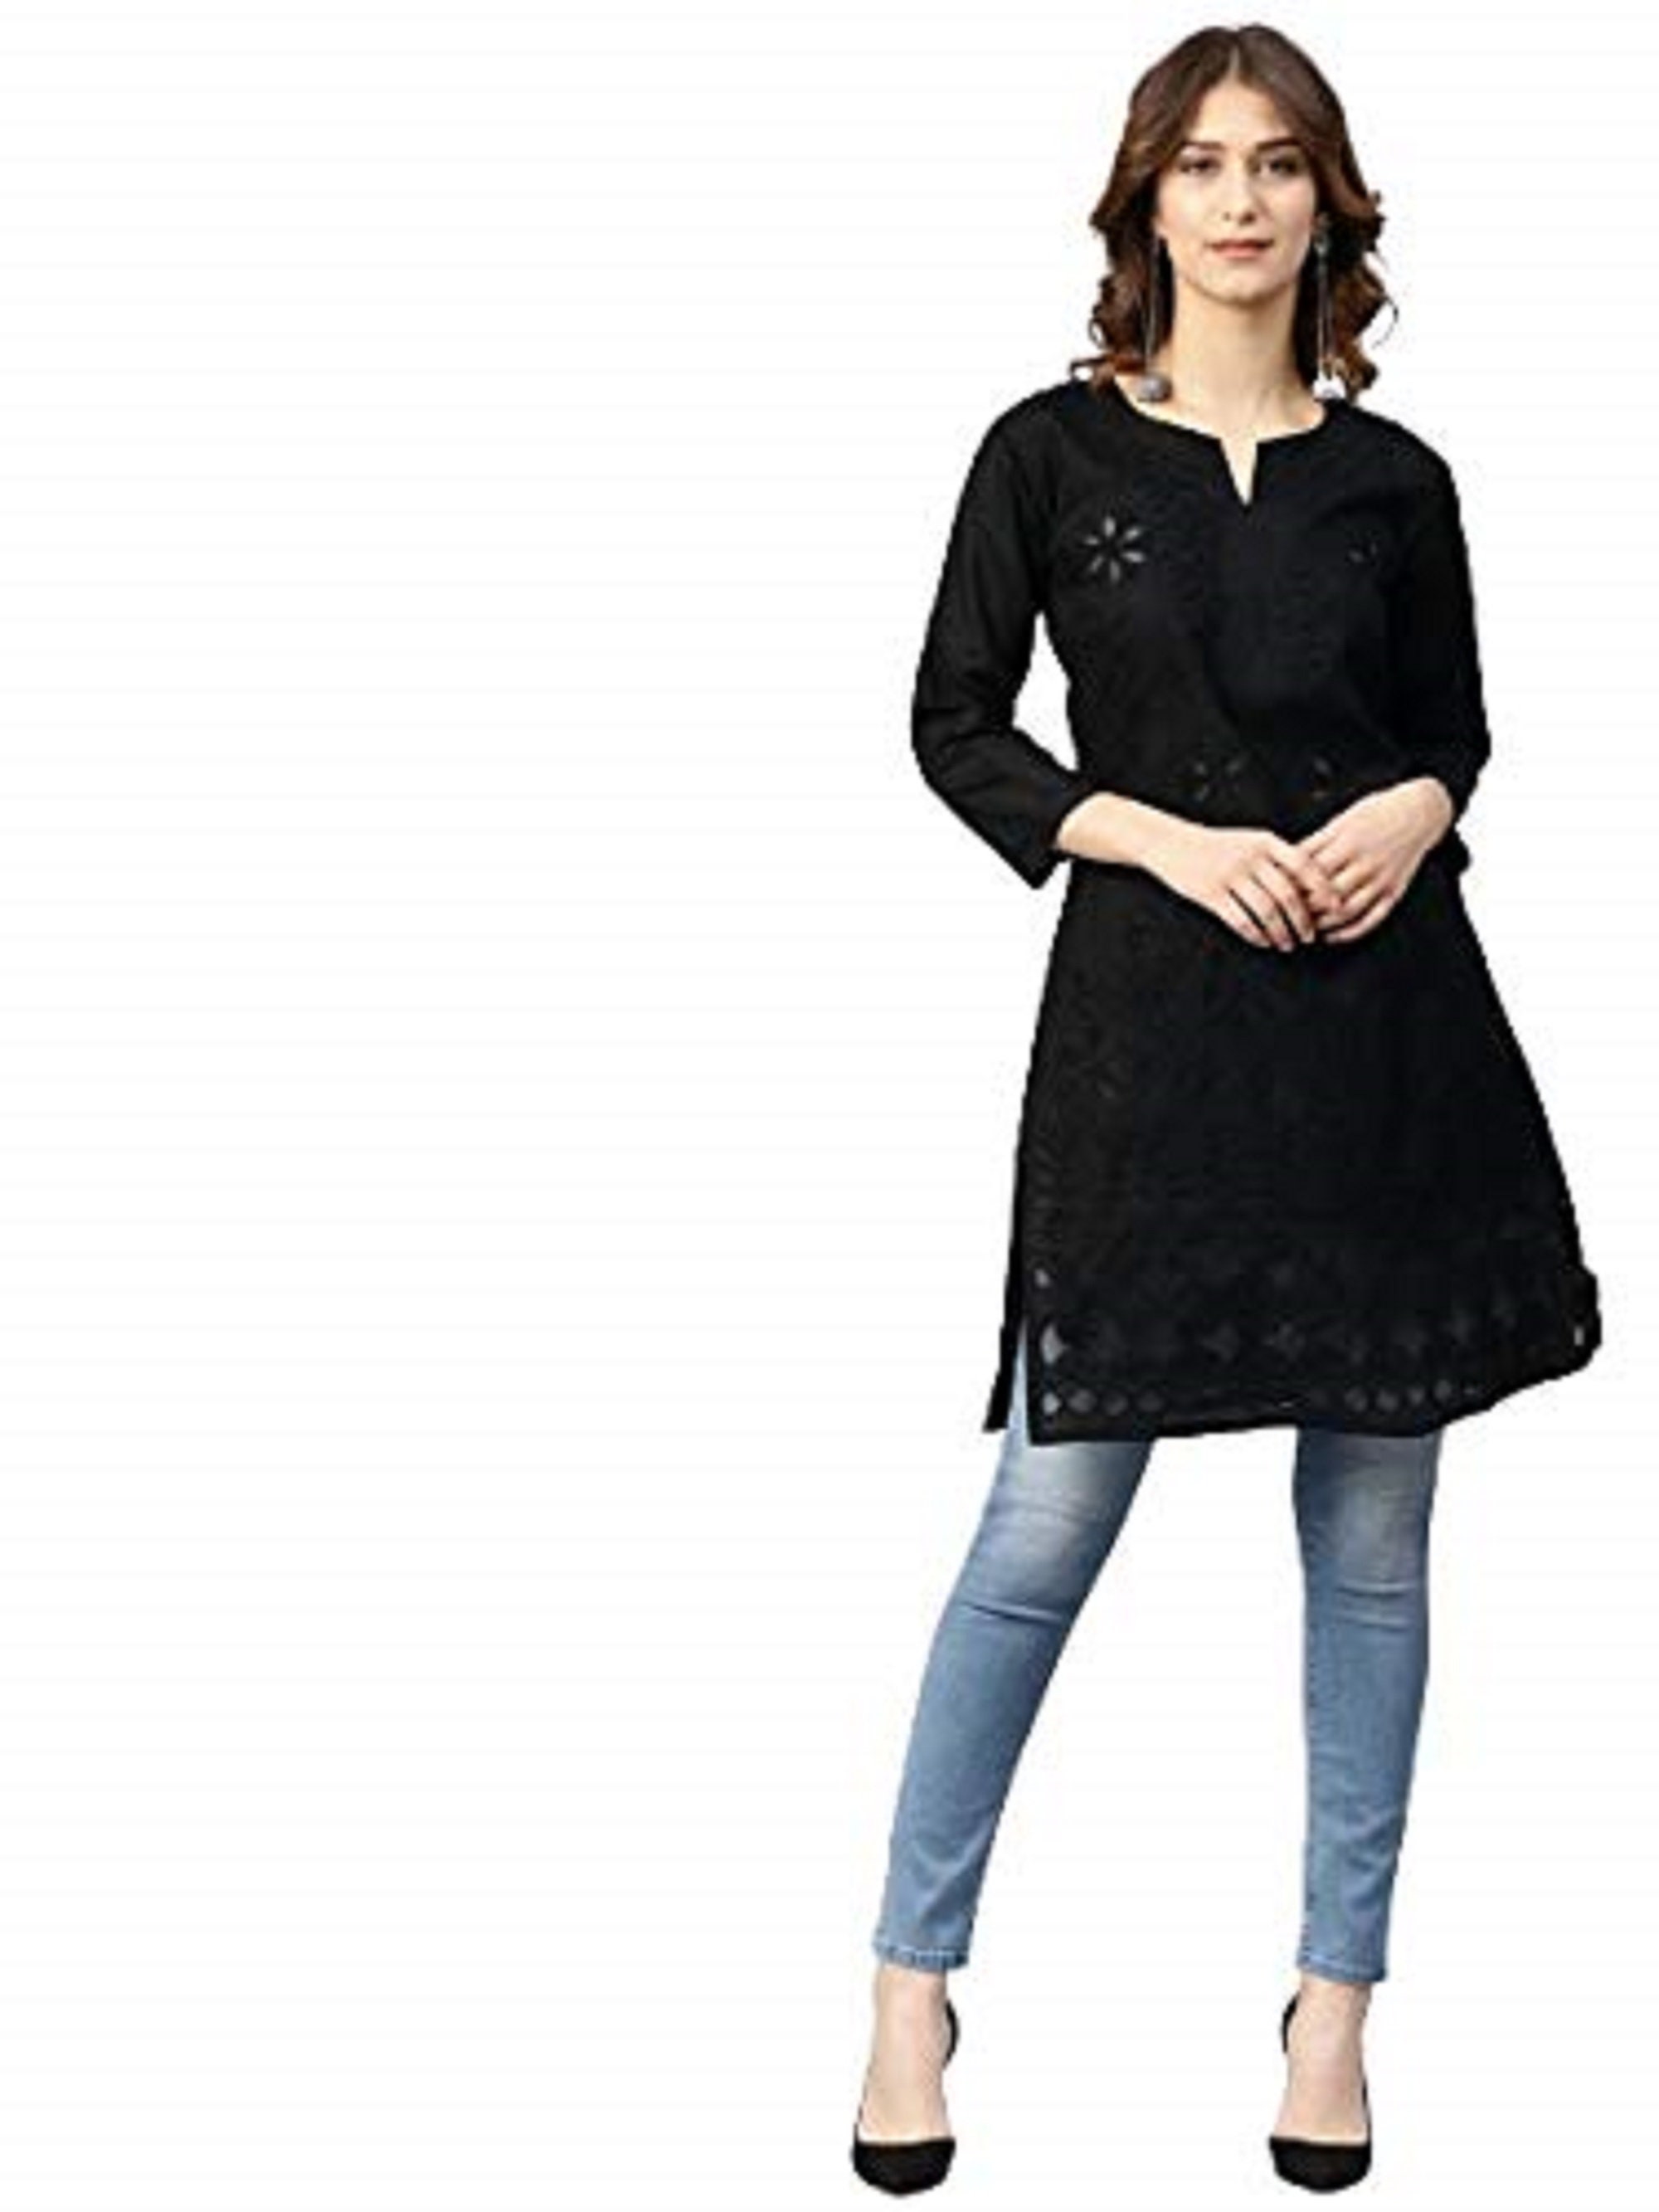 Get Contrast Neckline Black Kurti & Pants at ₹ 1500 | LBB Shop